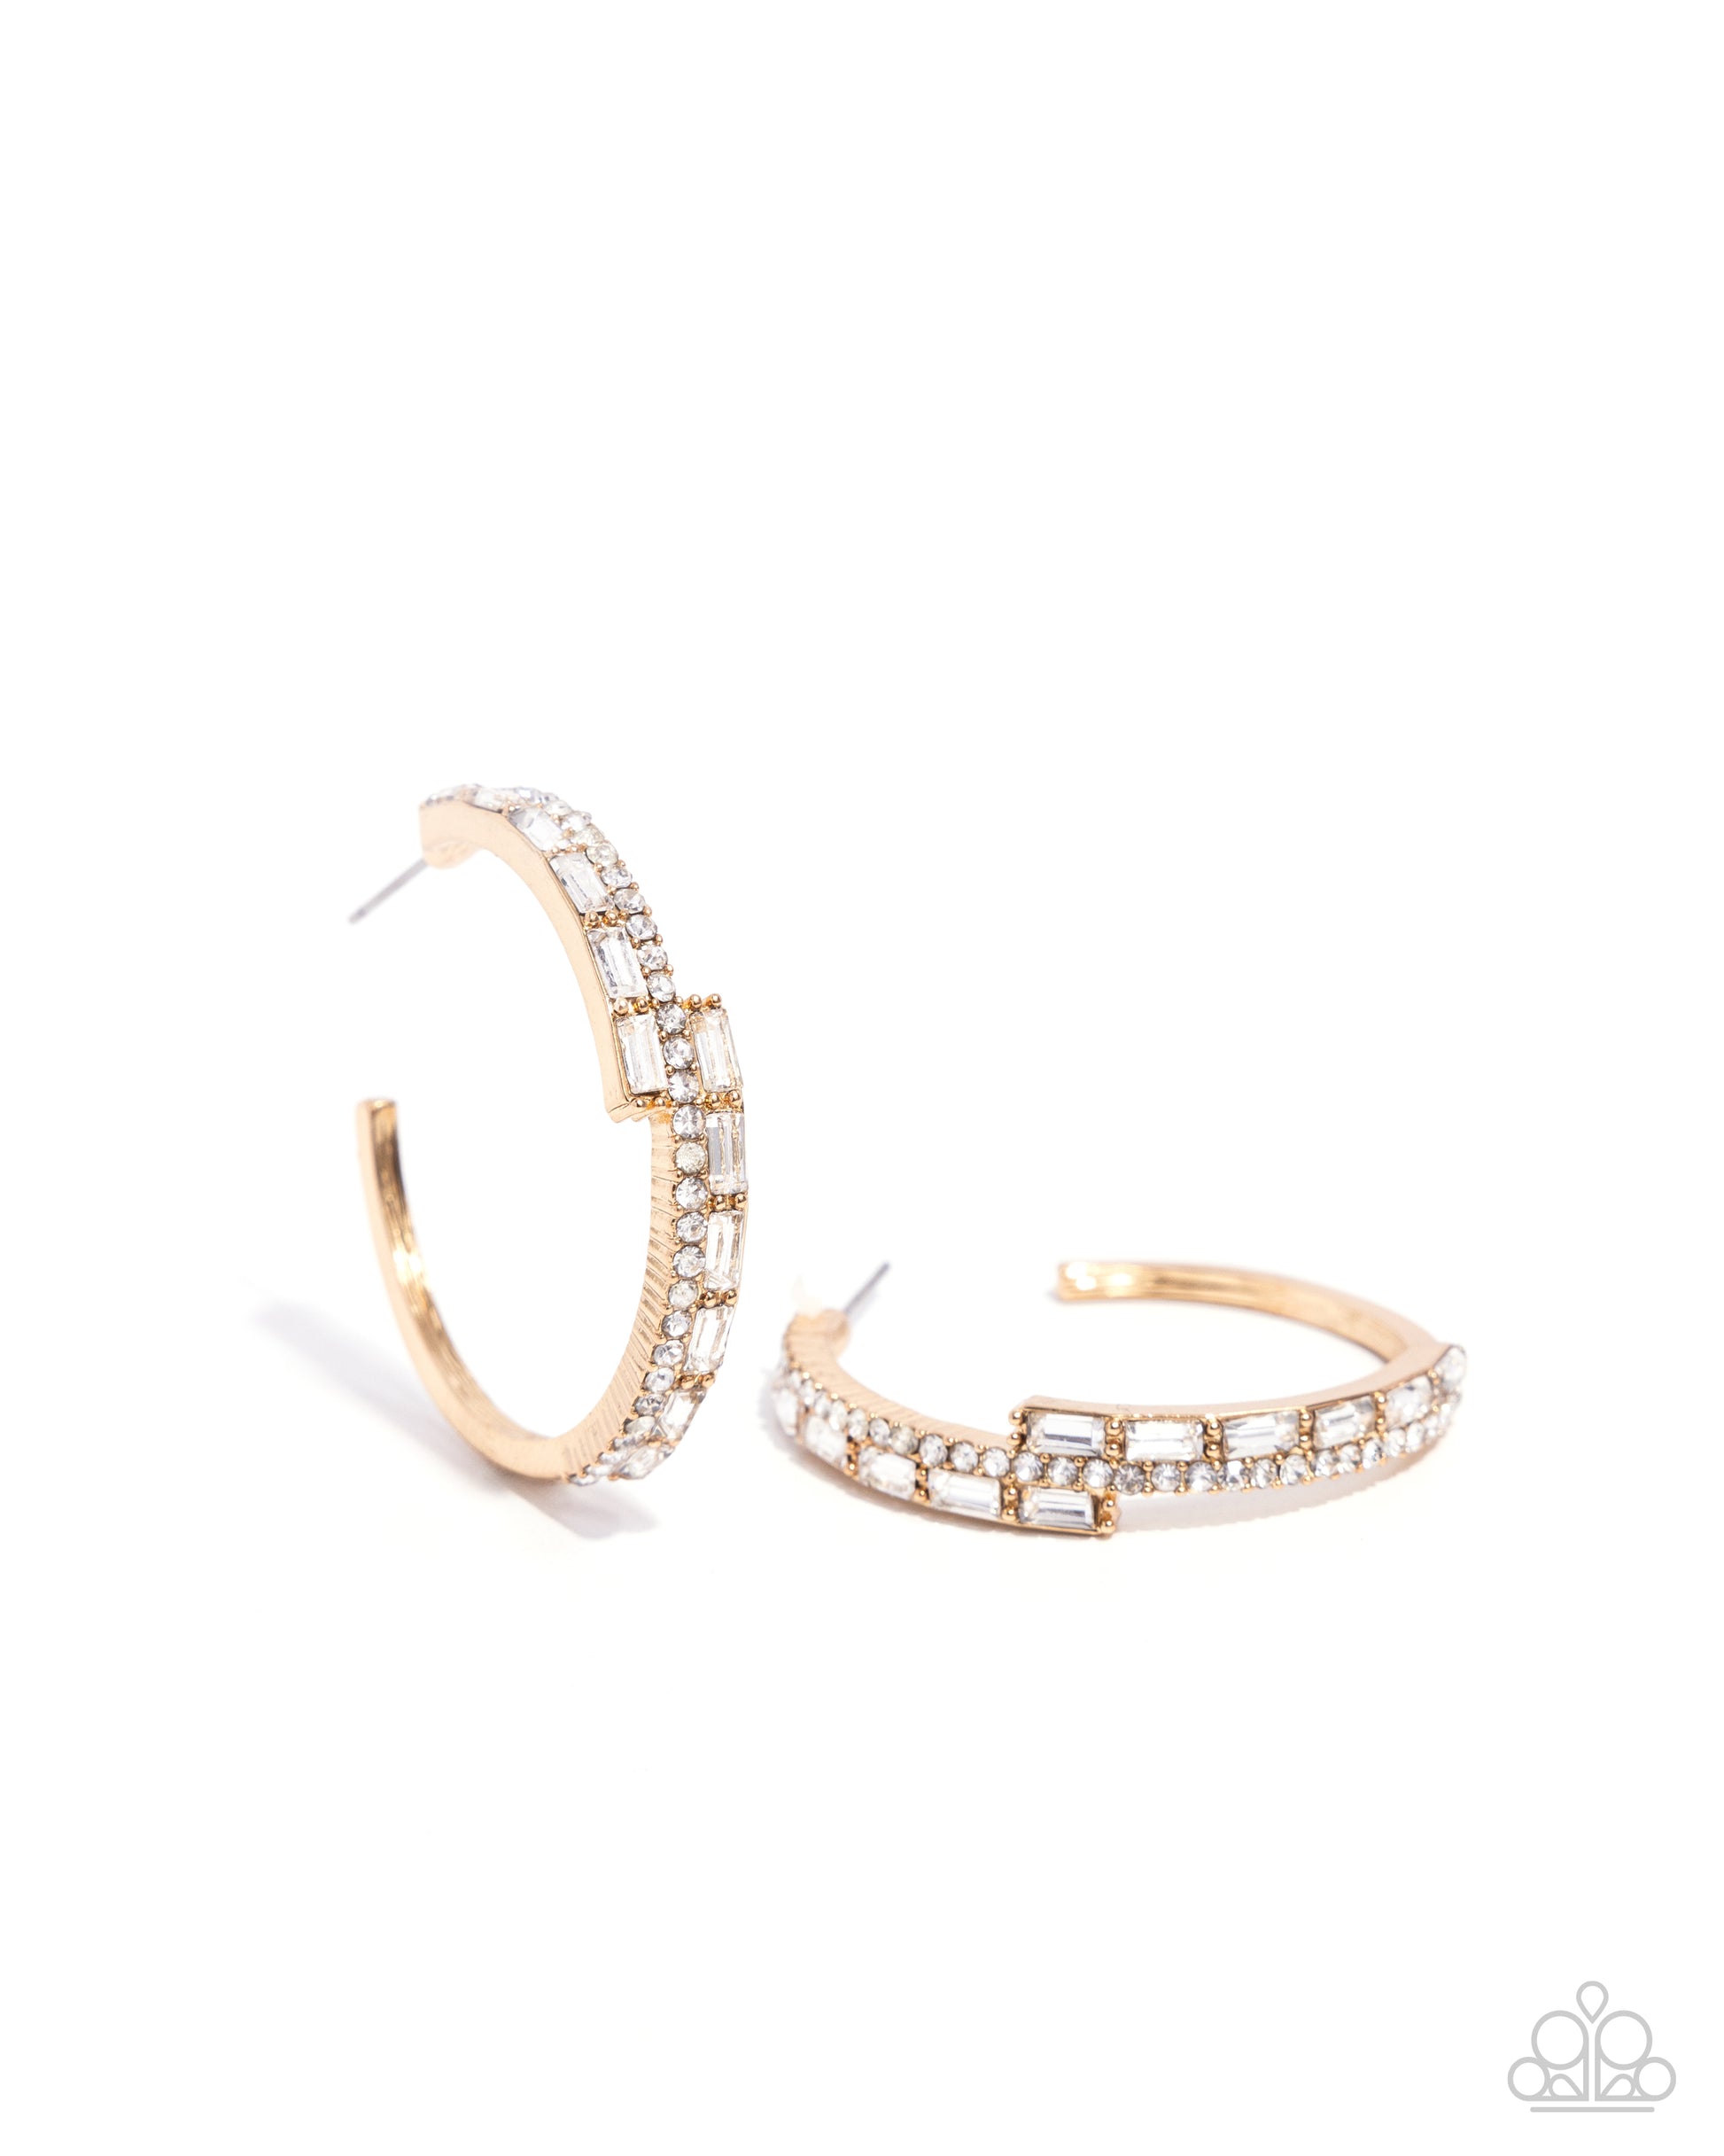 Ritzy Reputation - gold - Paparazzi earrings – JewelryBlingThing